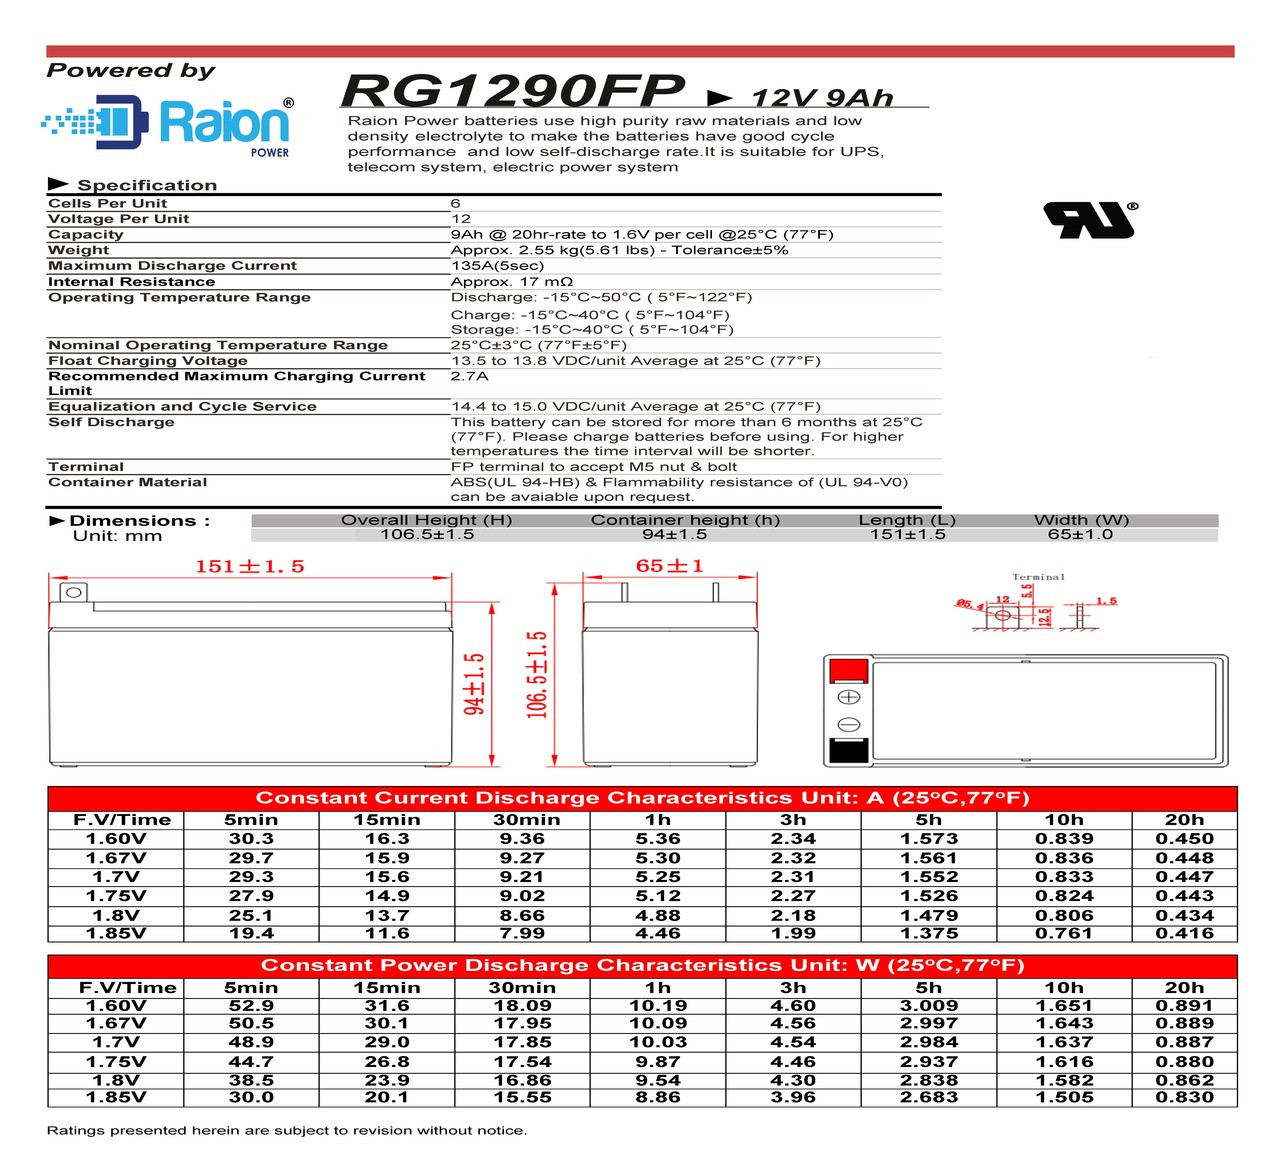 Raion Power 12V 9Ah Battery Data Sheet for Firman 4550 Watt P03612 Generator